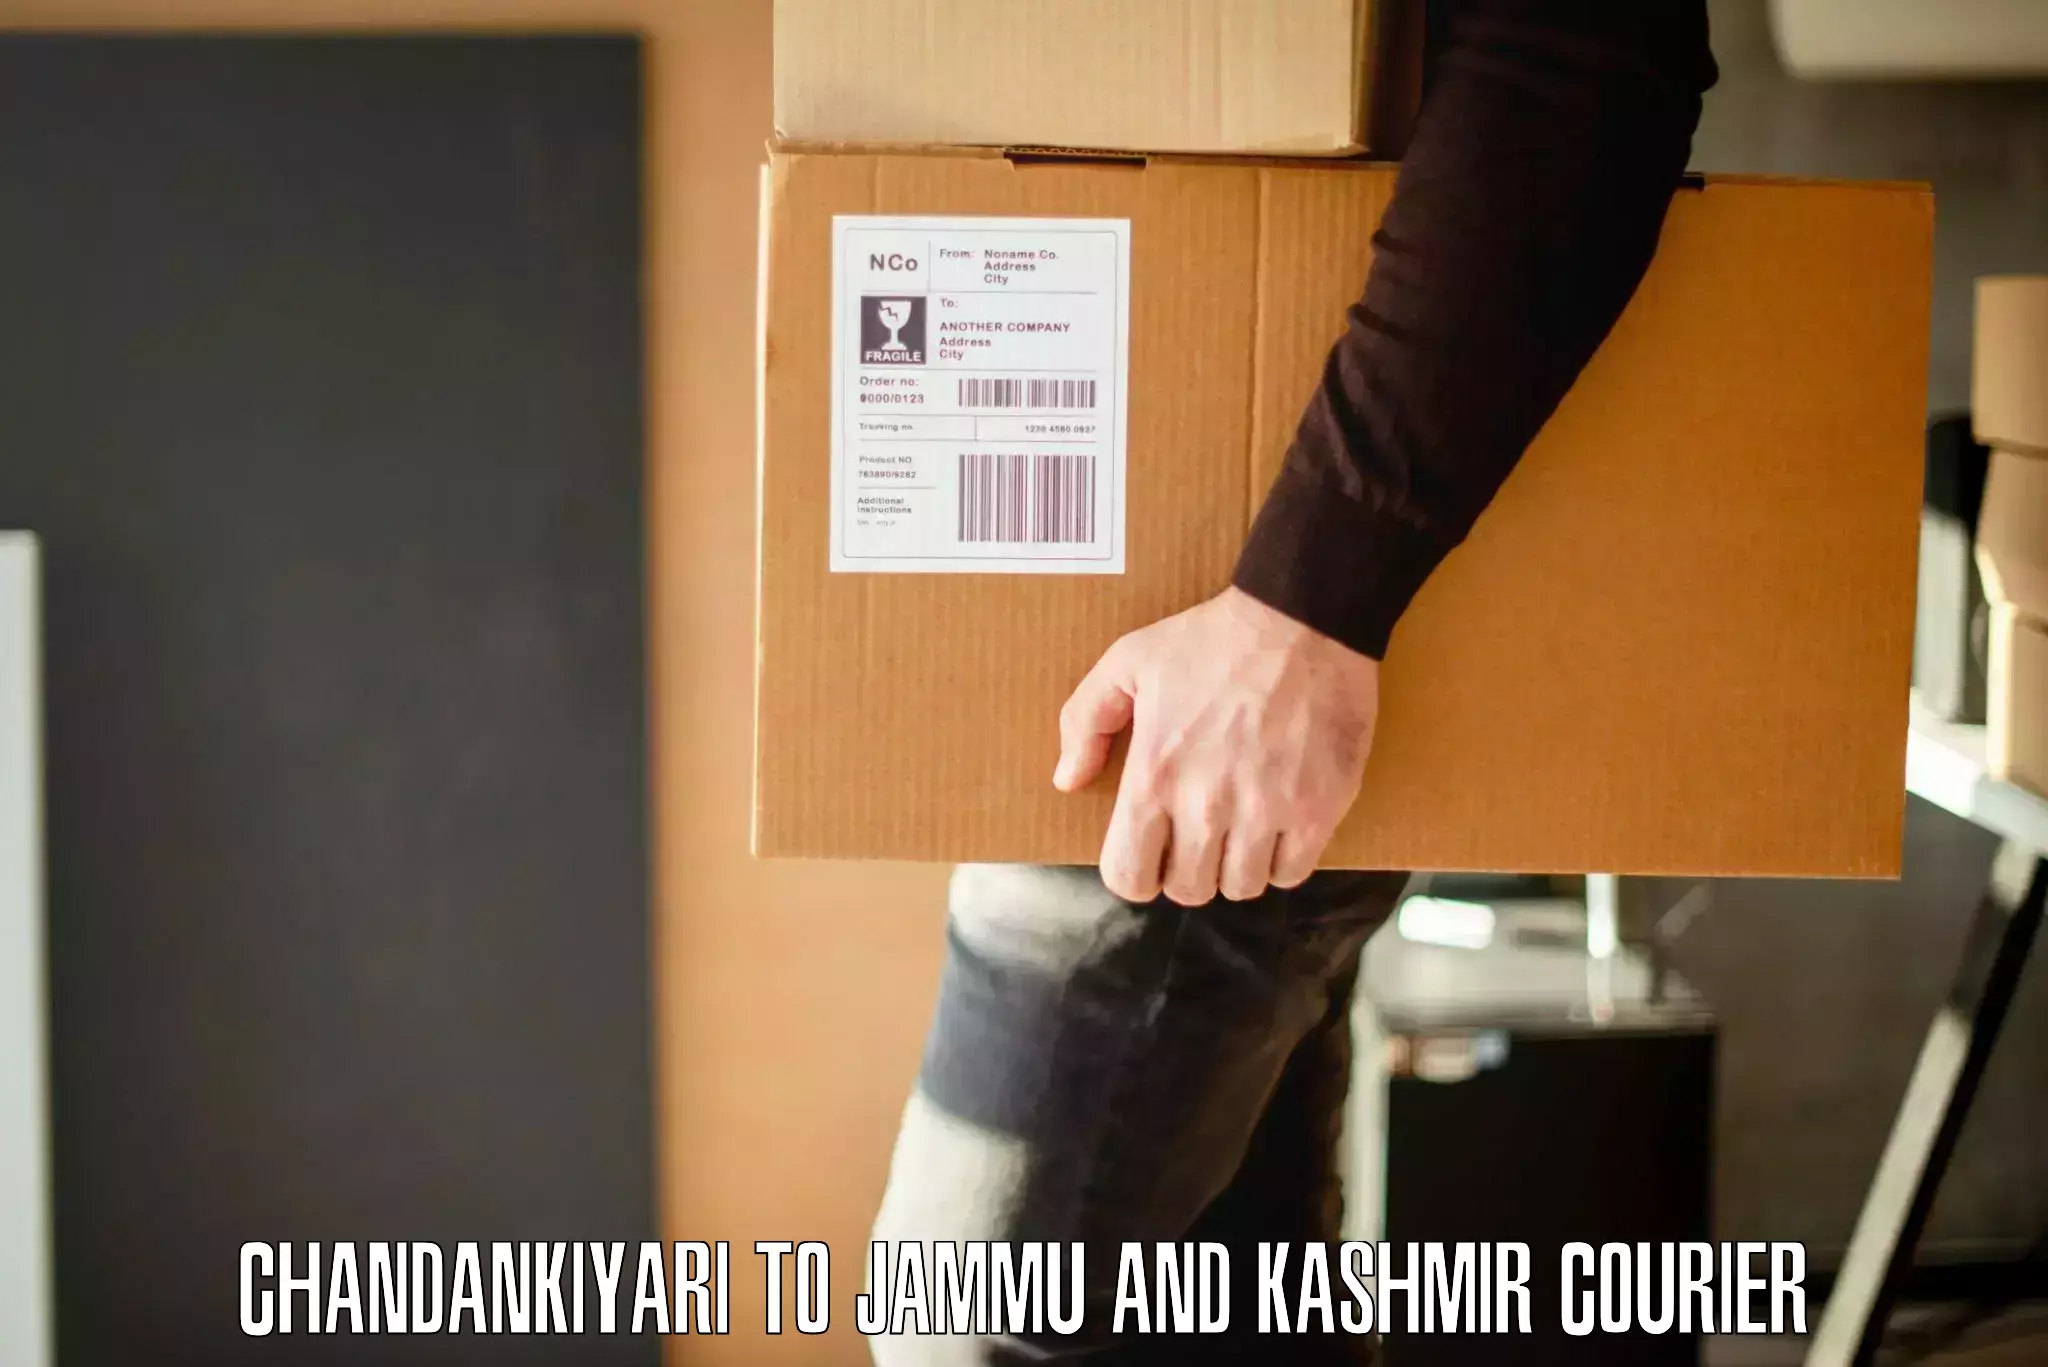 Professional moving company Chandankiyari to Baramulla